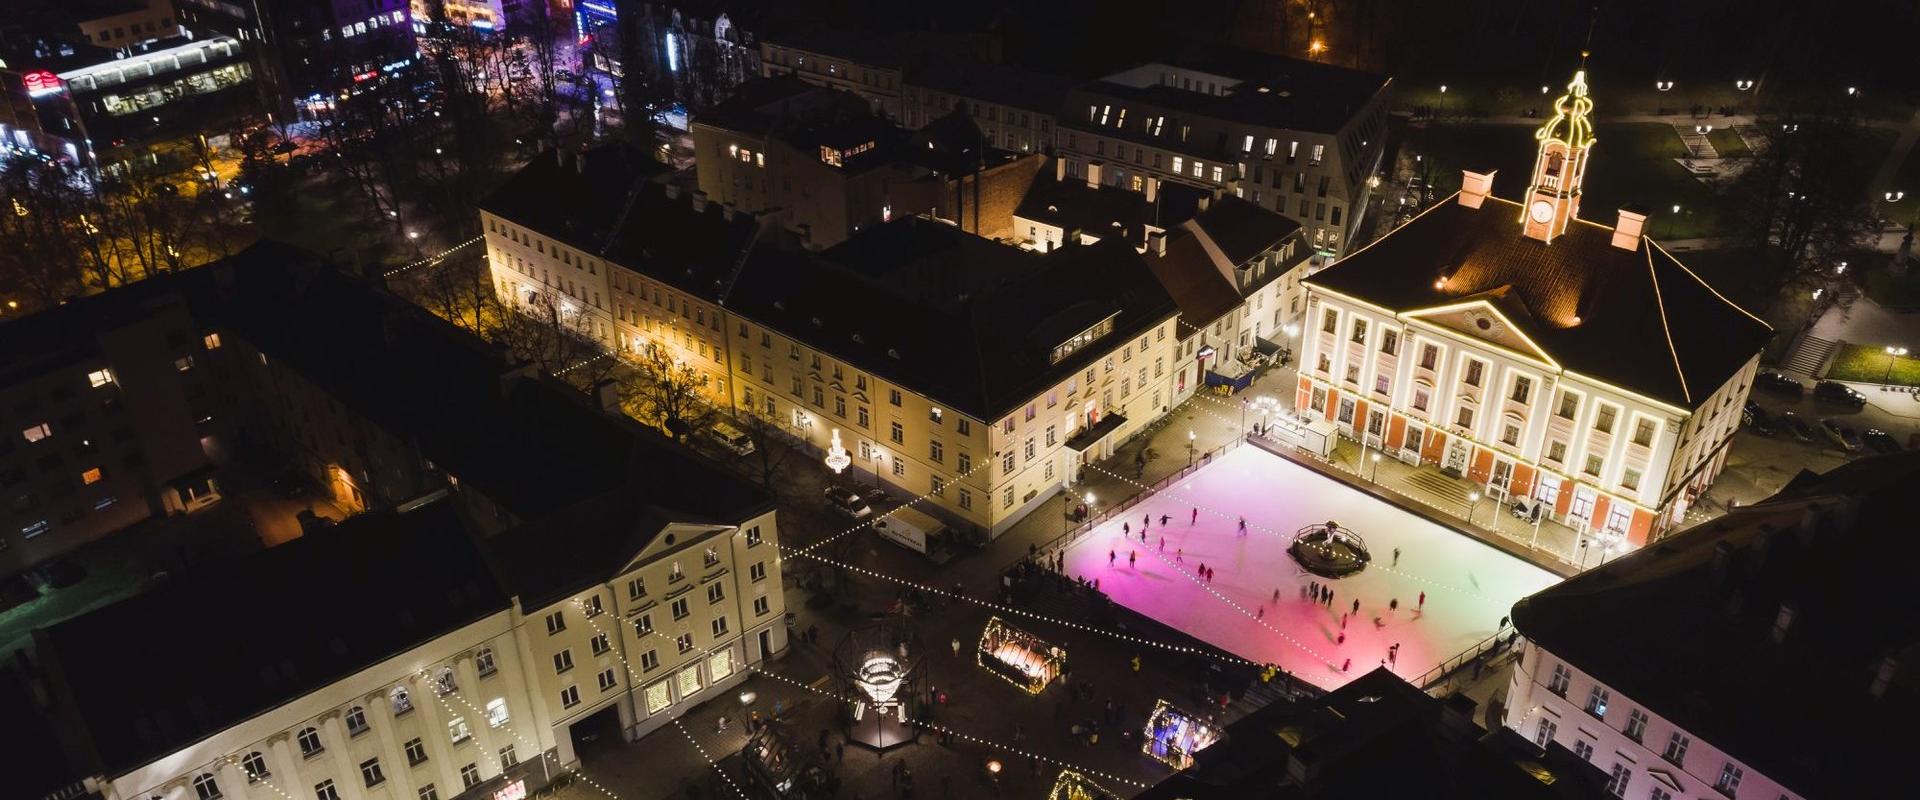 Tartu city centre skating rink in the evening